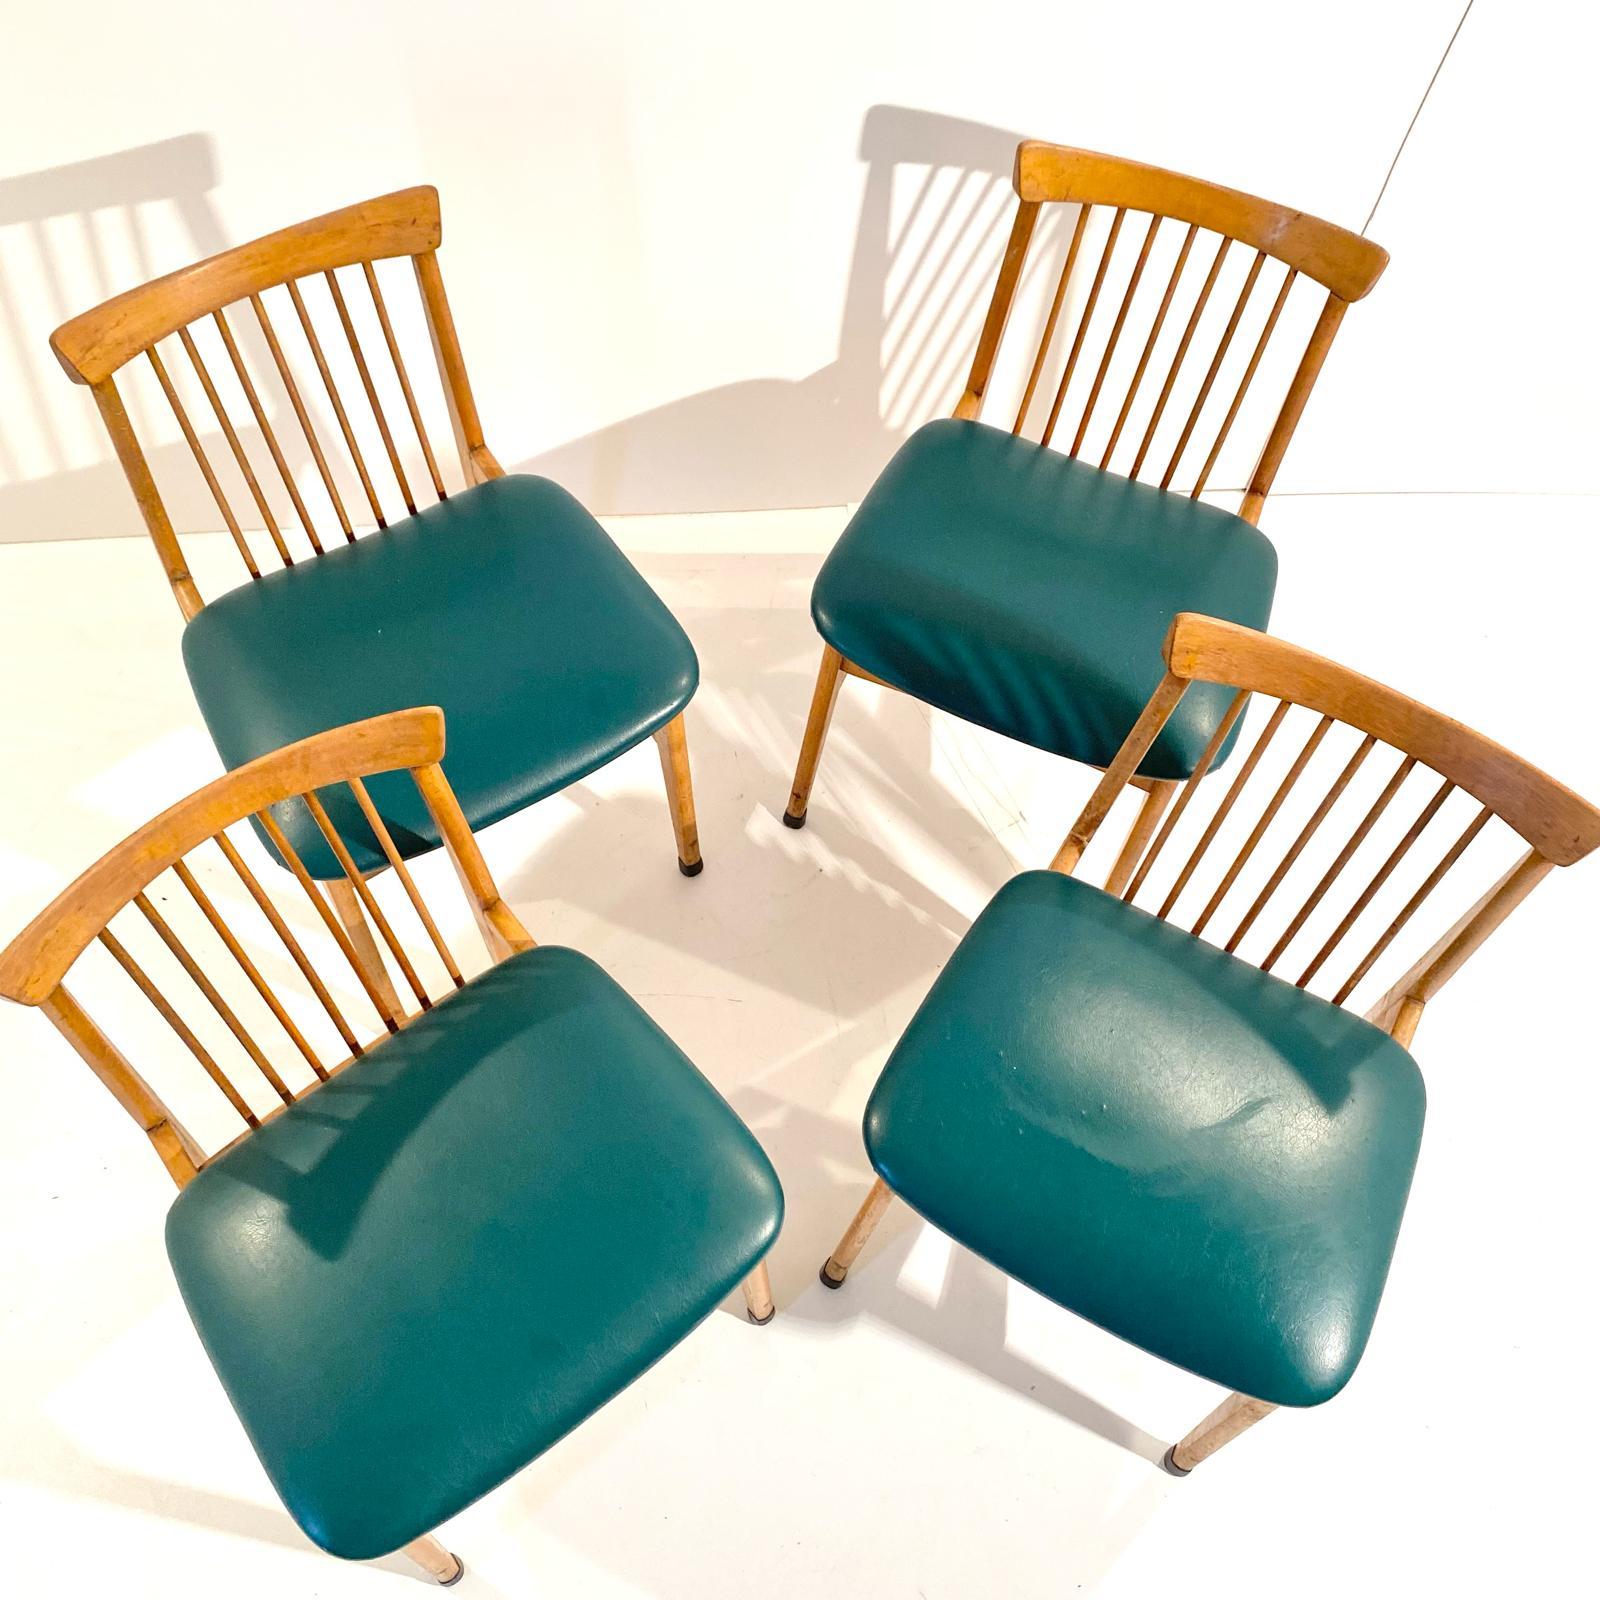 Midcentury modern wood dining chairs, Vierer-Set, Italien, 1960er Jahre (Kunstleder) im Angebot